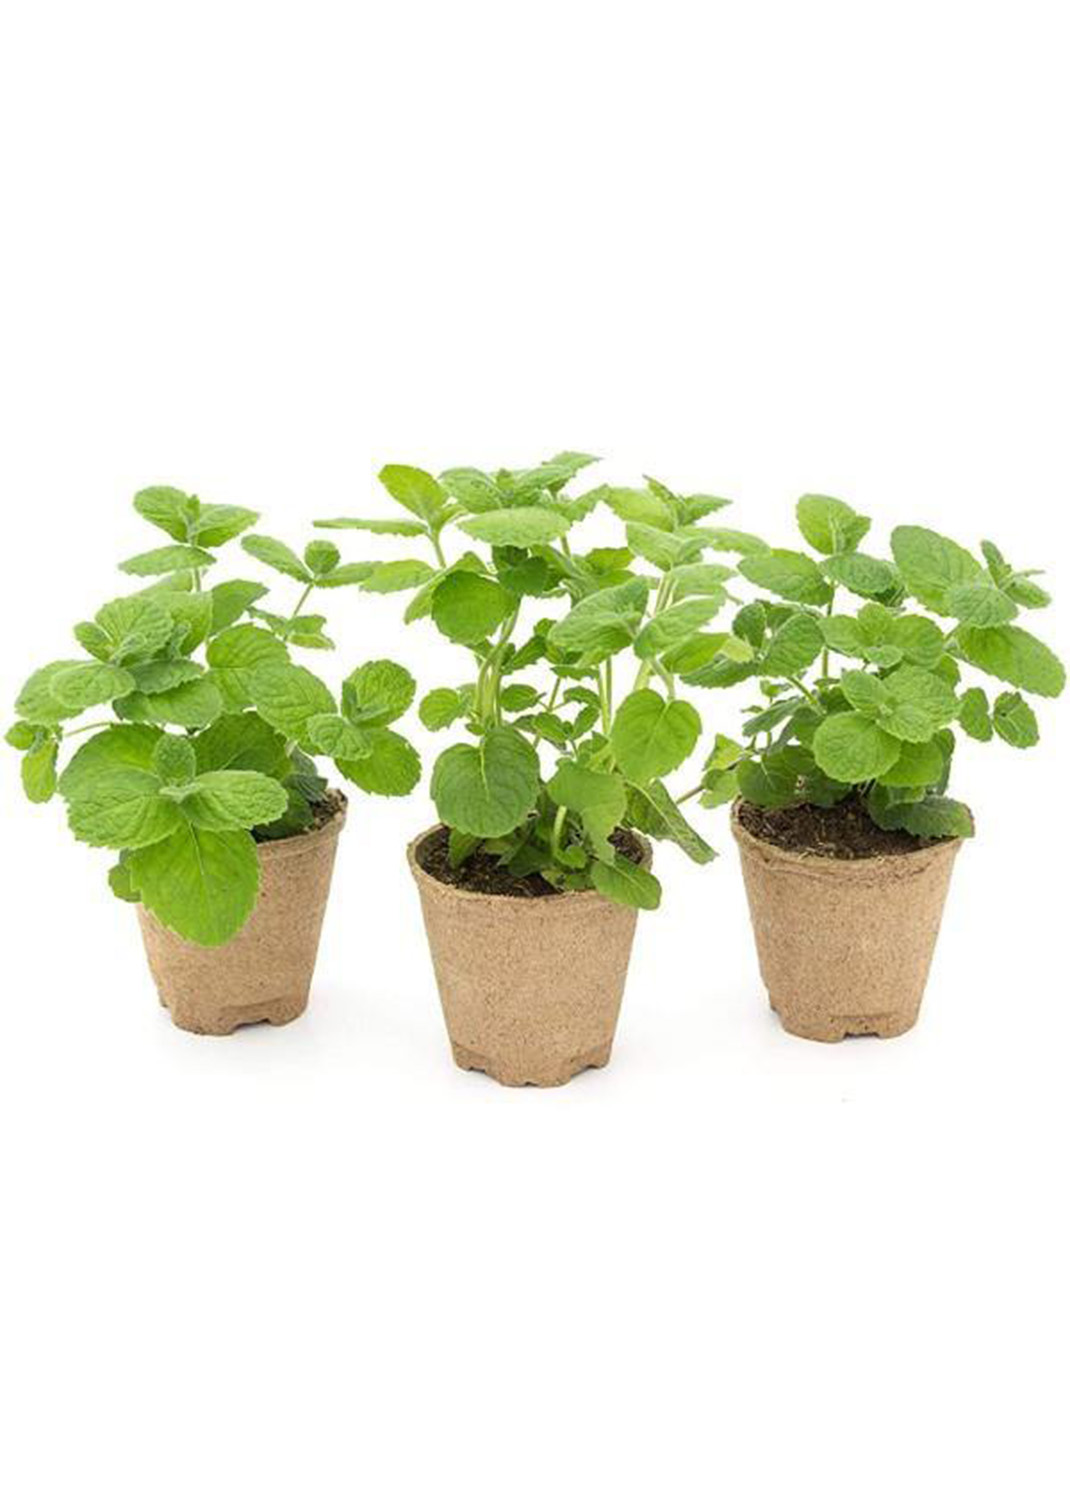 Mint Plant, Mentha